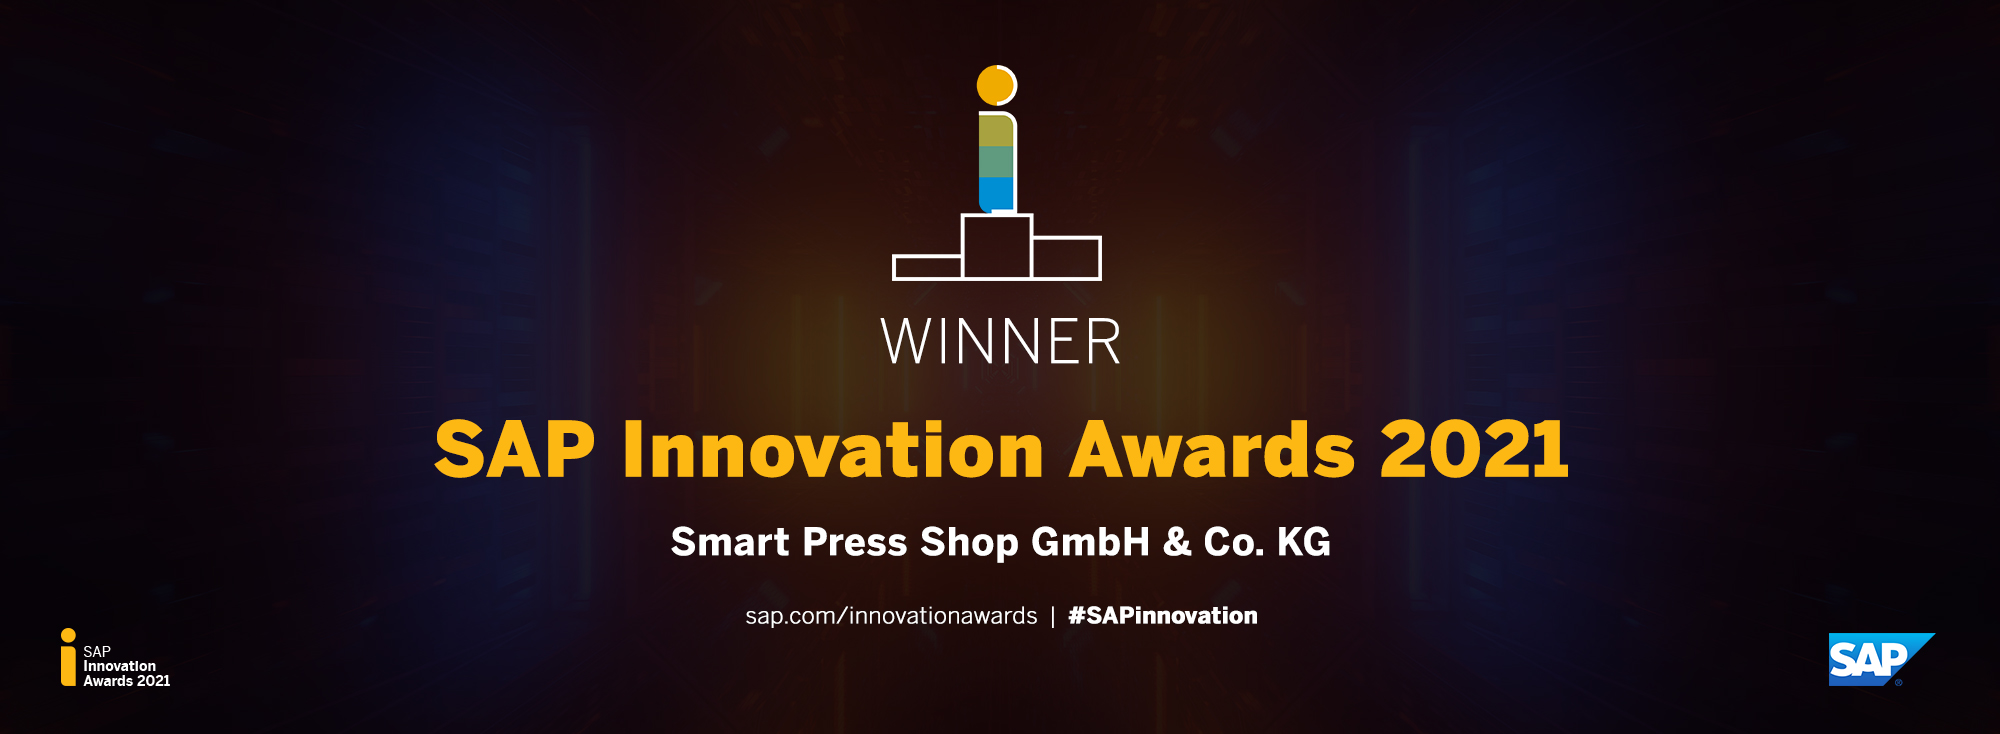 Smart-Press-Shop-GmbH-&-Co.-KG_Website-banner_Winner